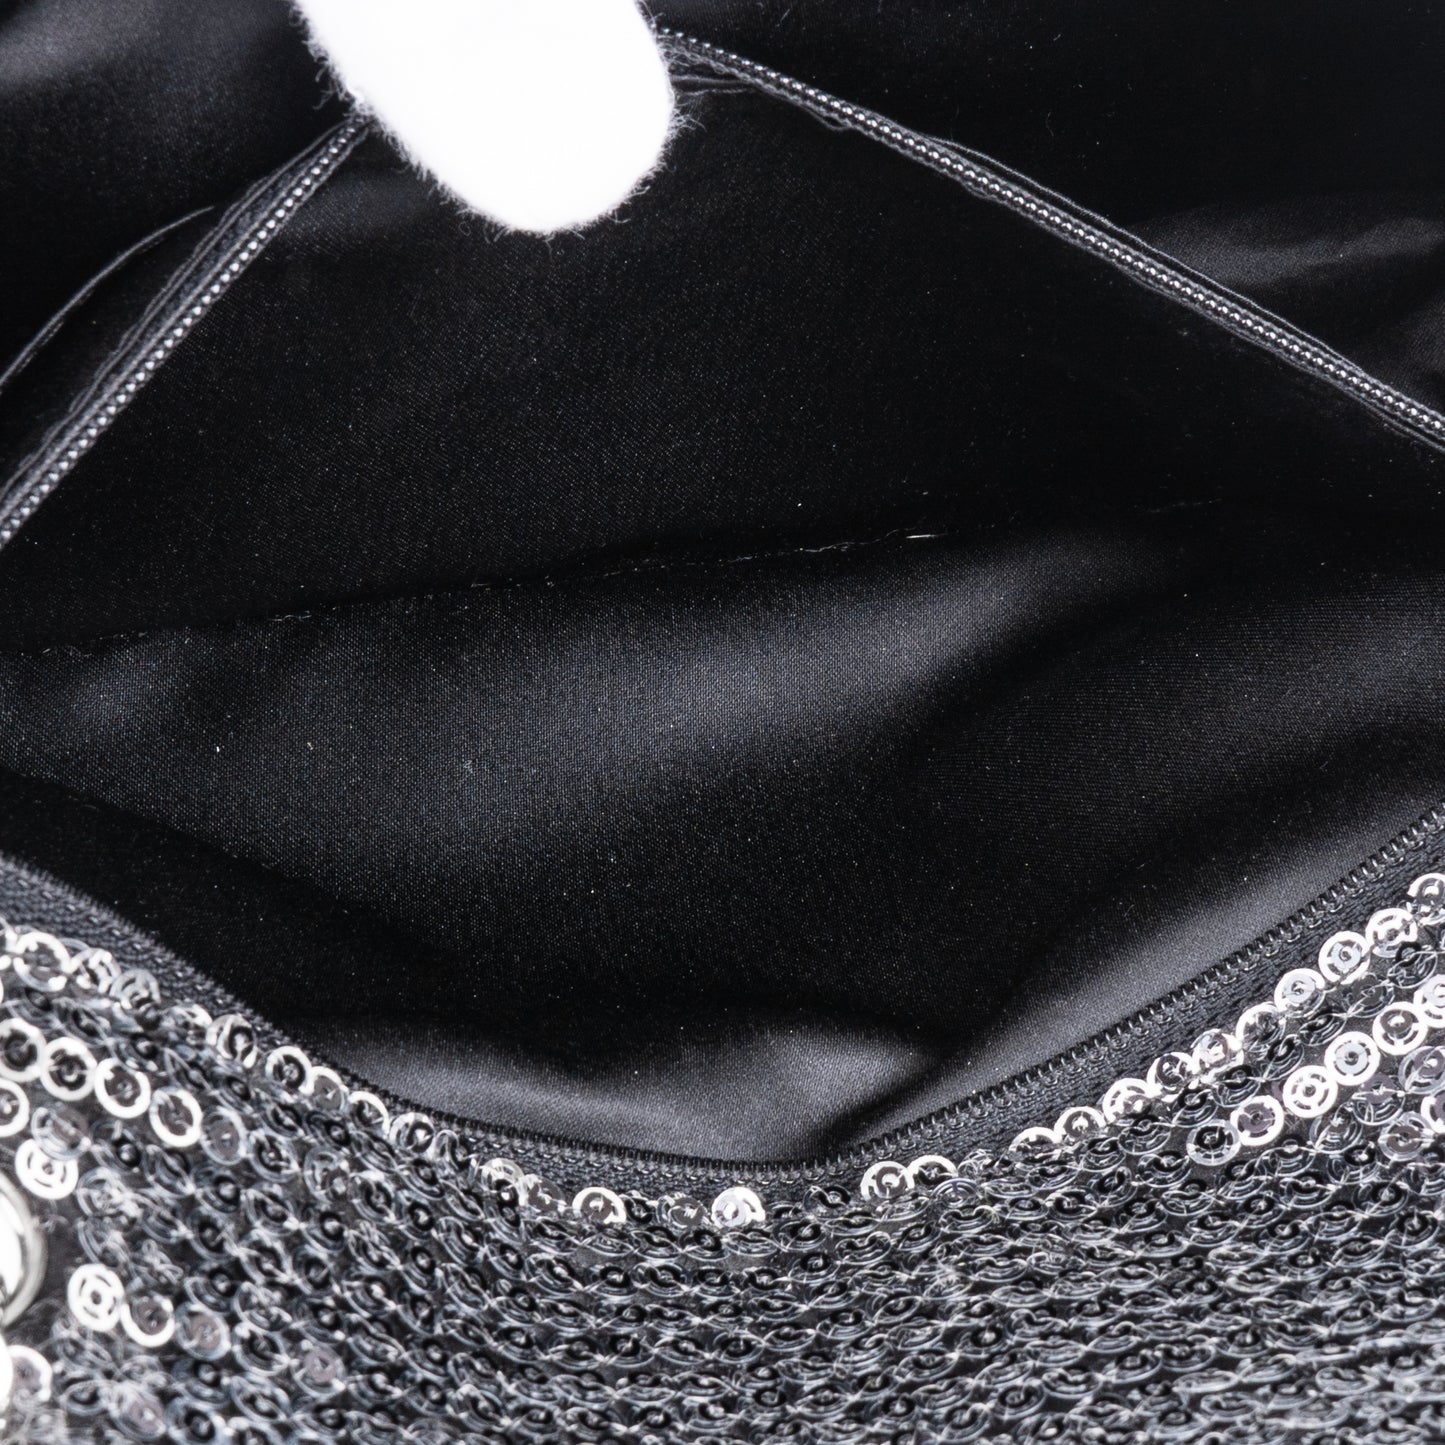 Chanel Silver Sequin Medium Single Flap Bag